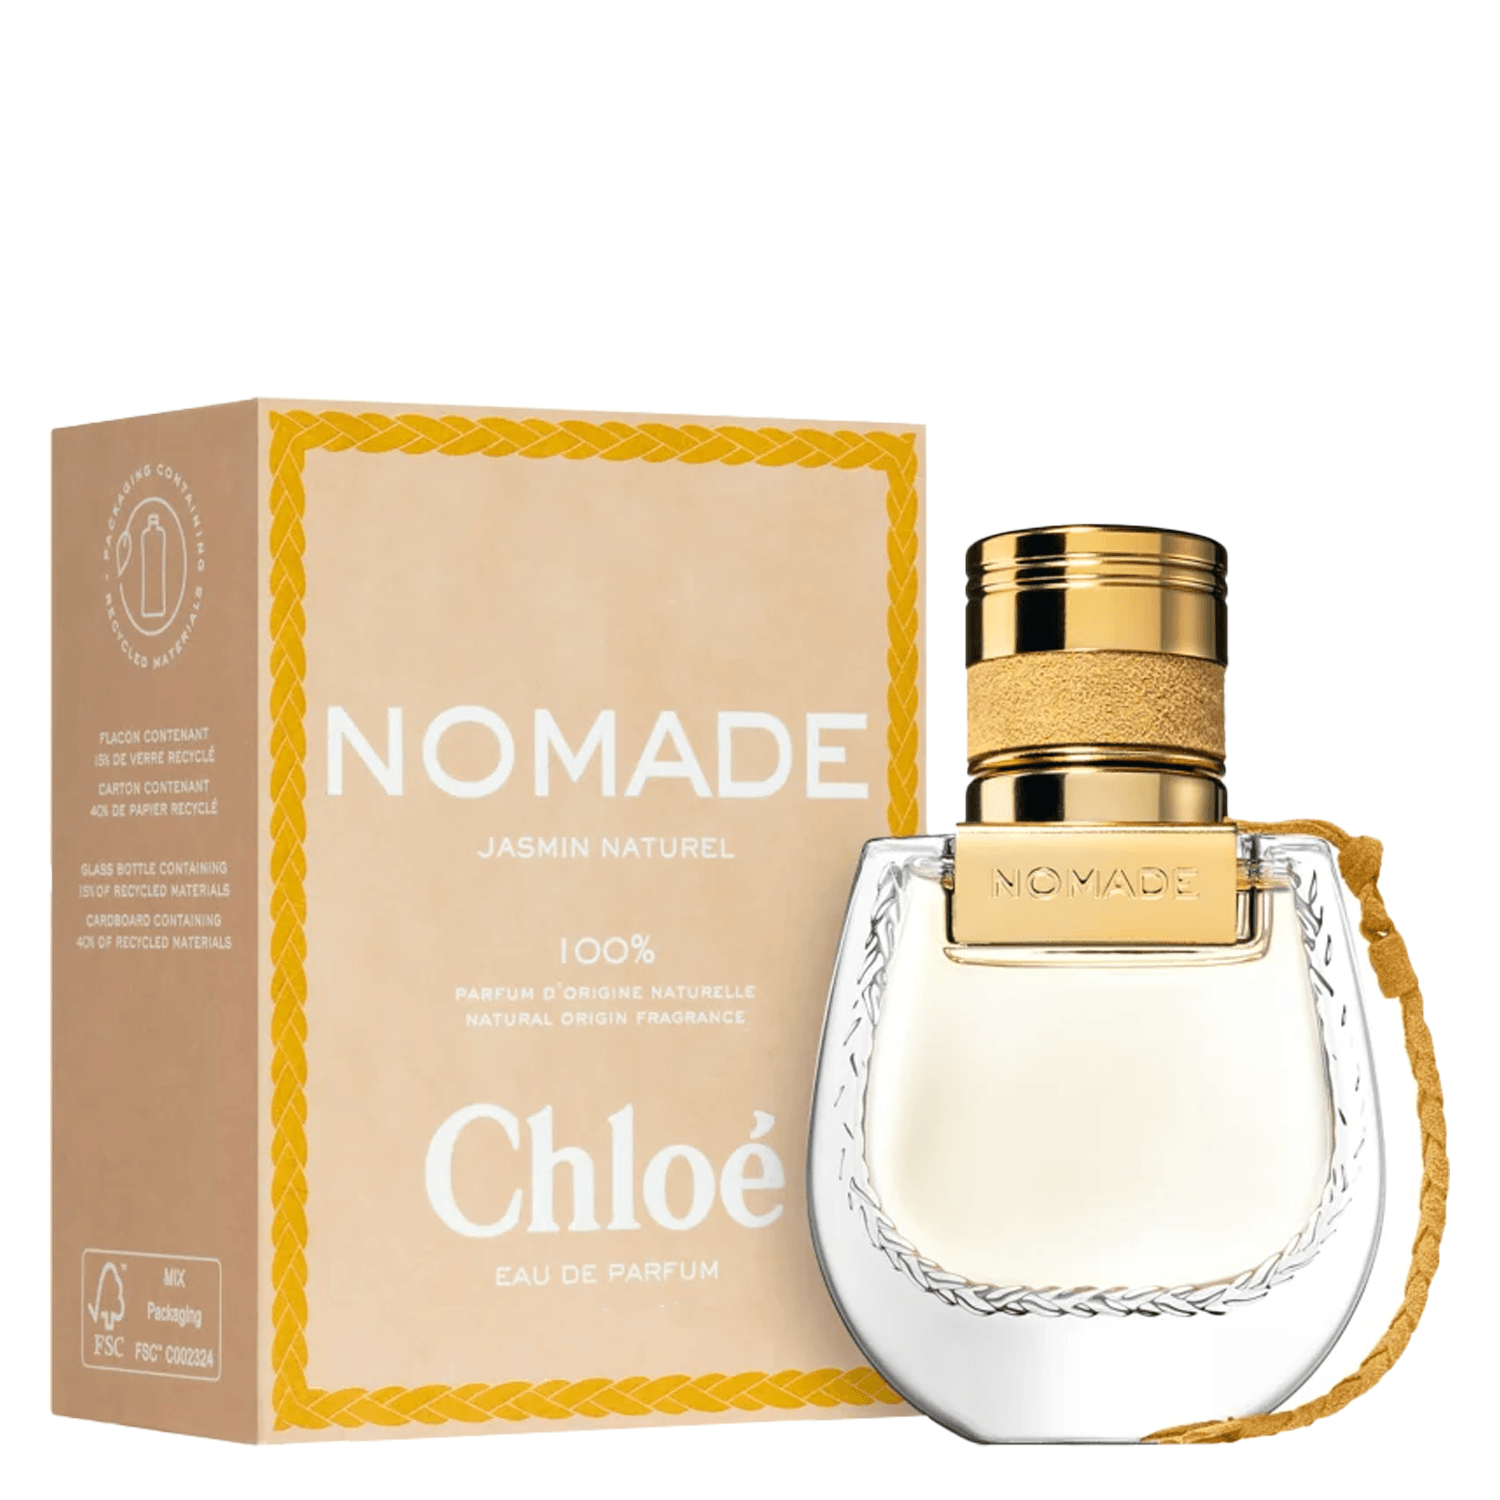 Produktbild von Chloé Nomade - Jasmin Naturel Eau de Parfum